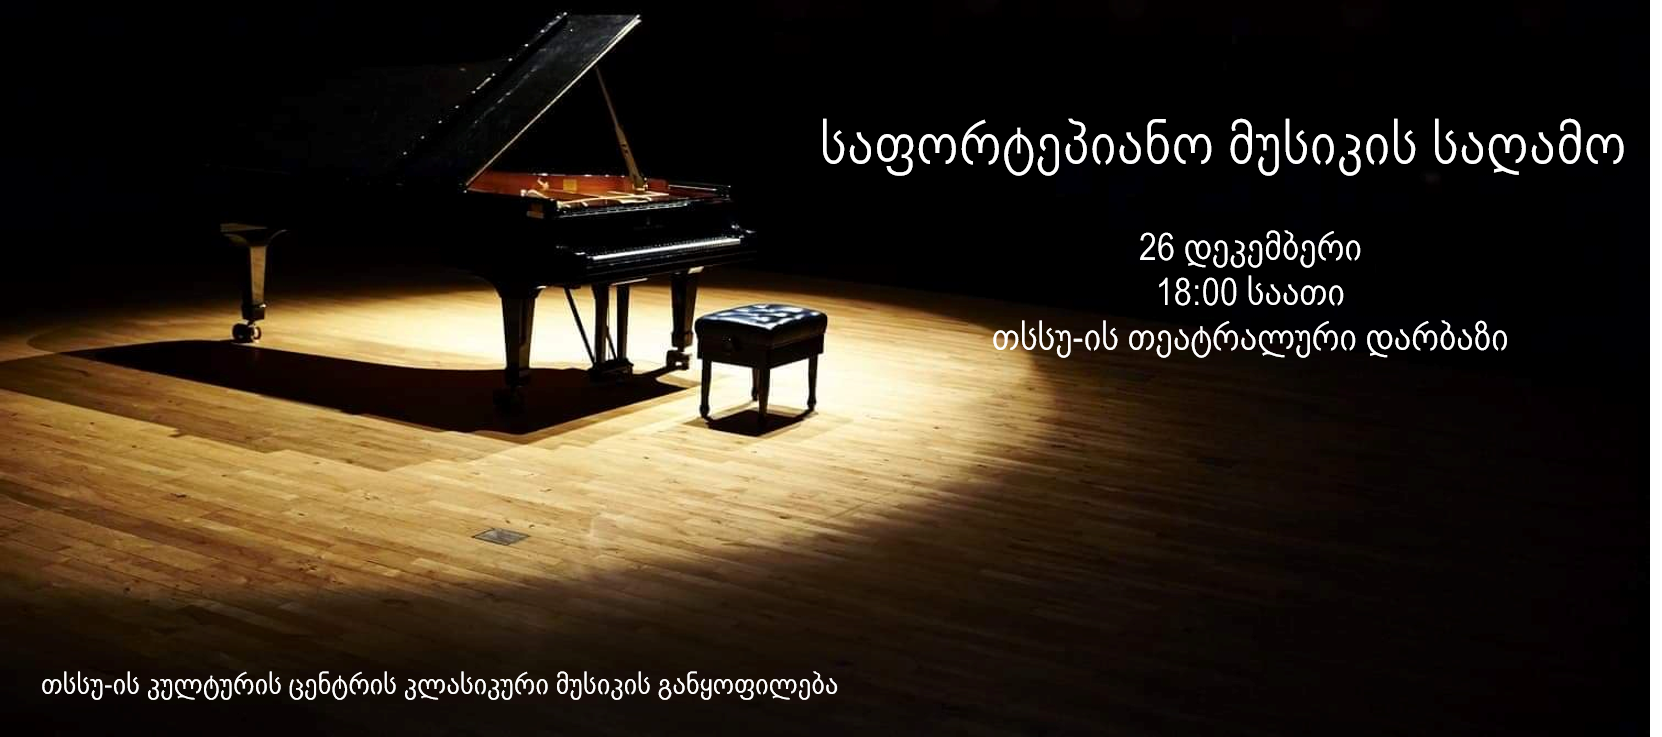 Piano Music Event